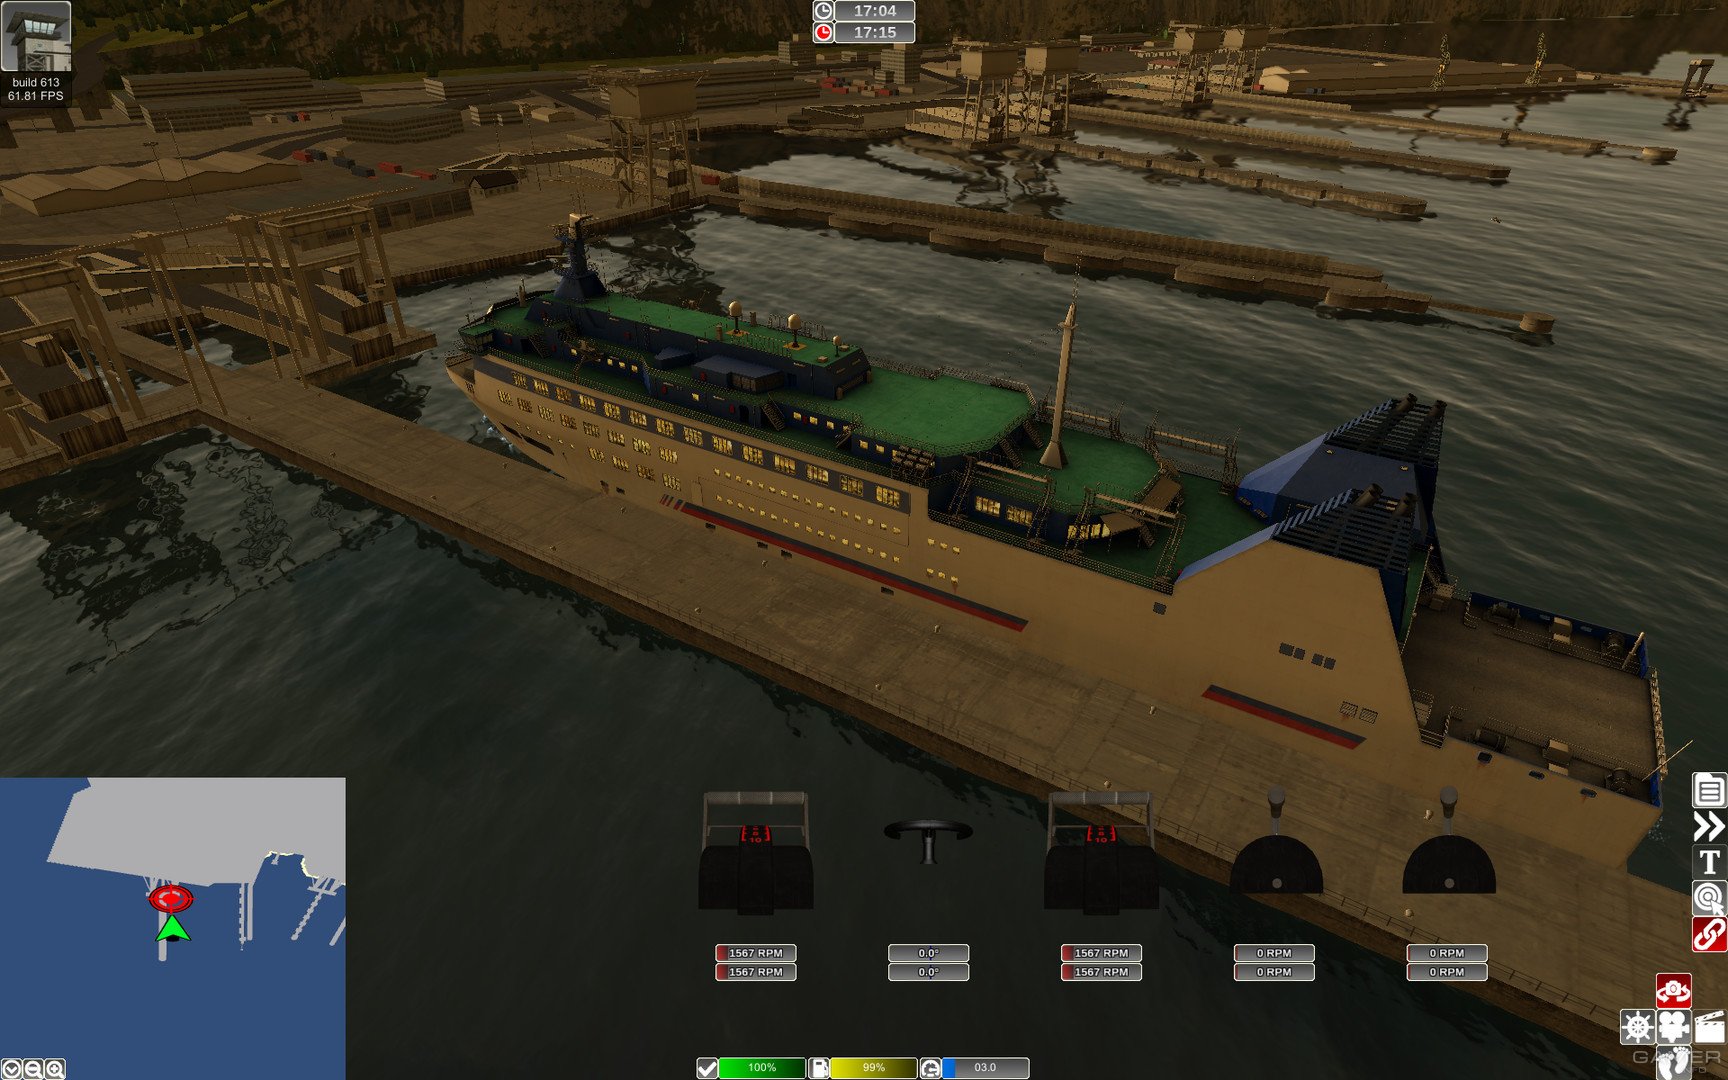 european ship simulator free download pc